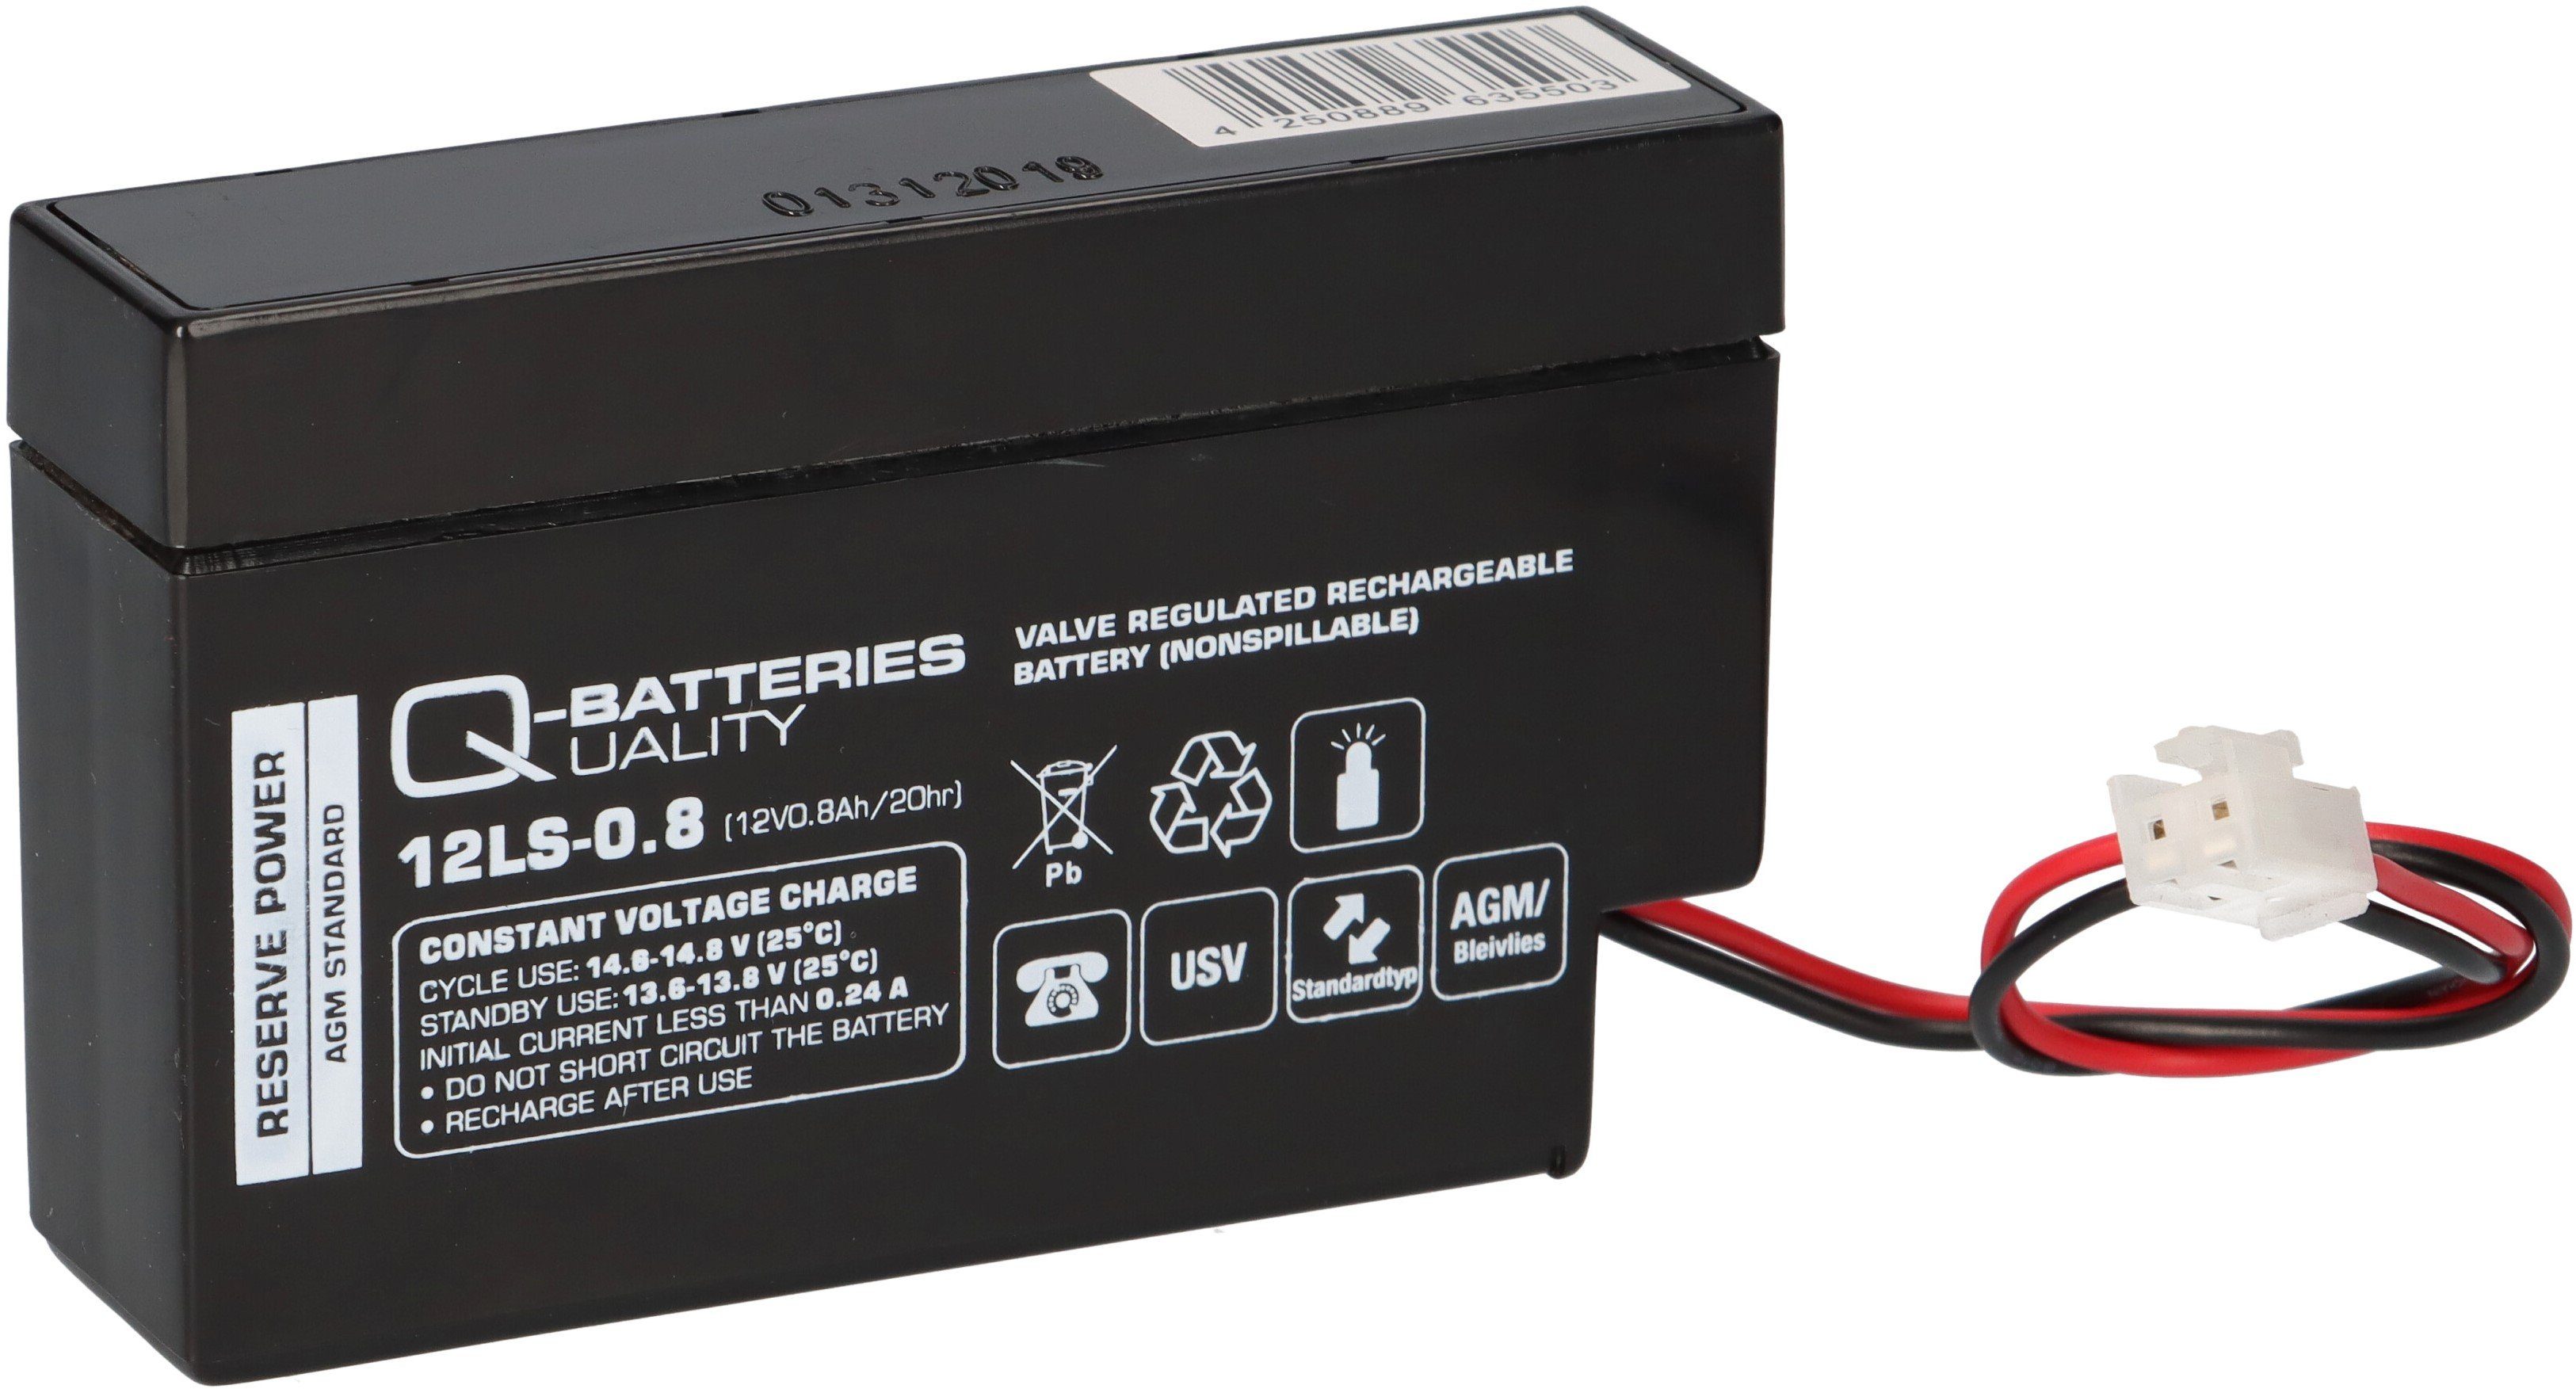 12LS-0.8 12V Bleiakkus 0,8Ah Stecker Q-Batteries / AGM Q-Batteries mit JST Blei-Vlies-Akku